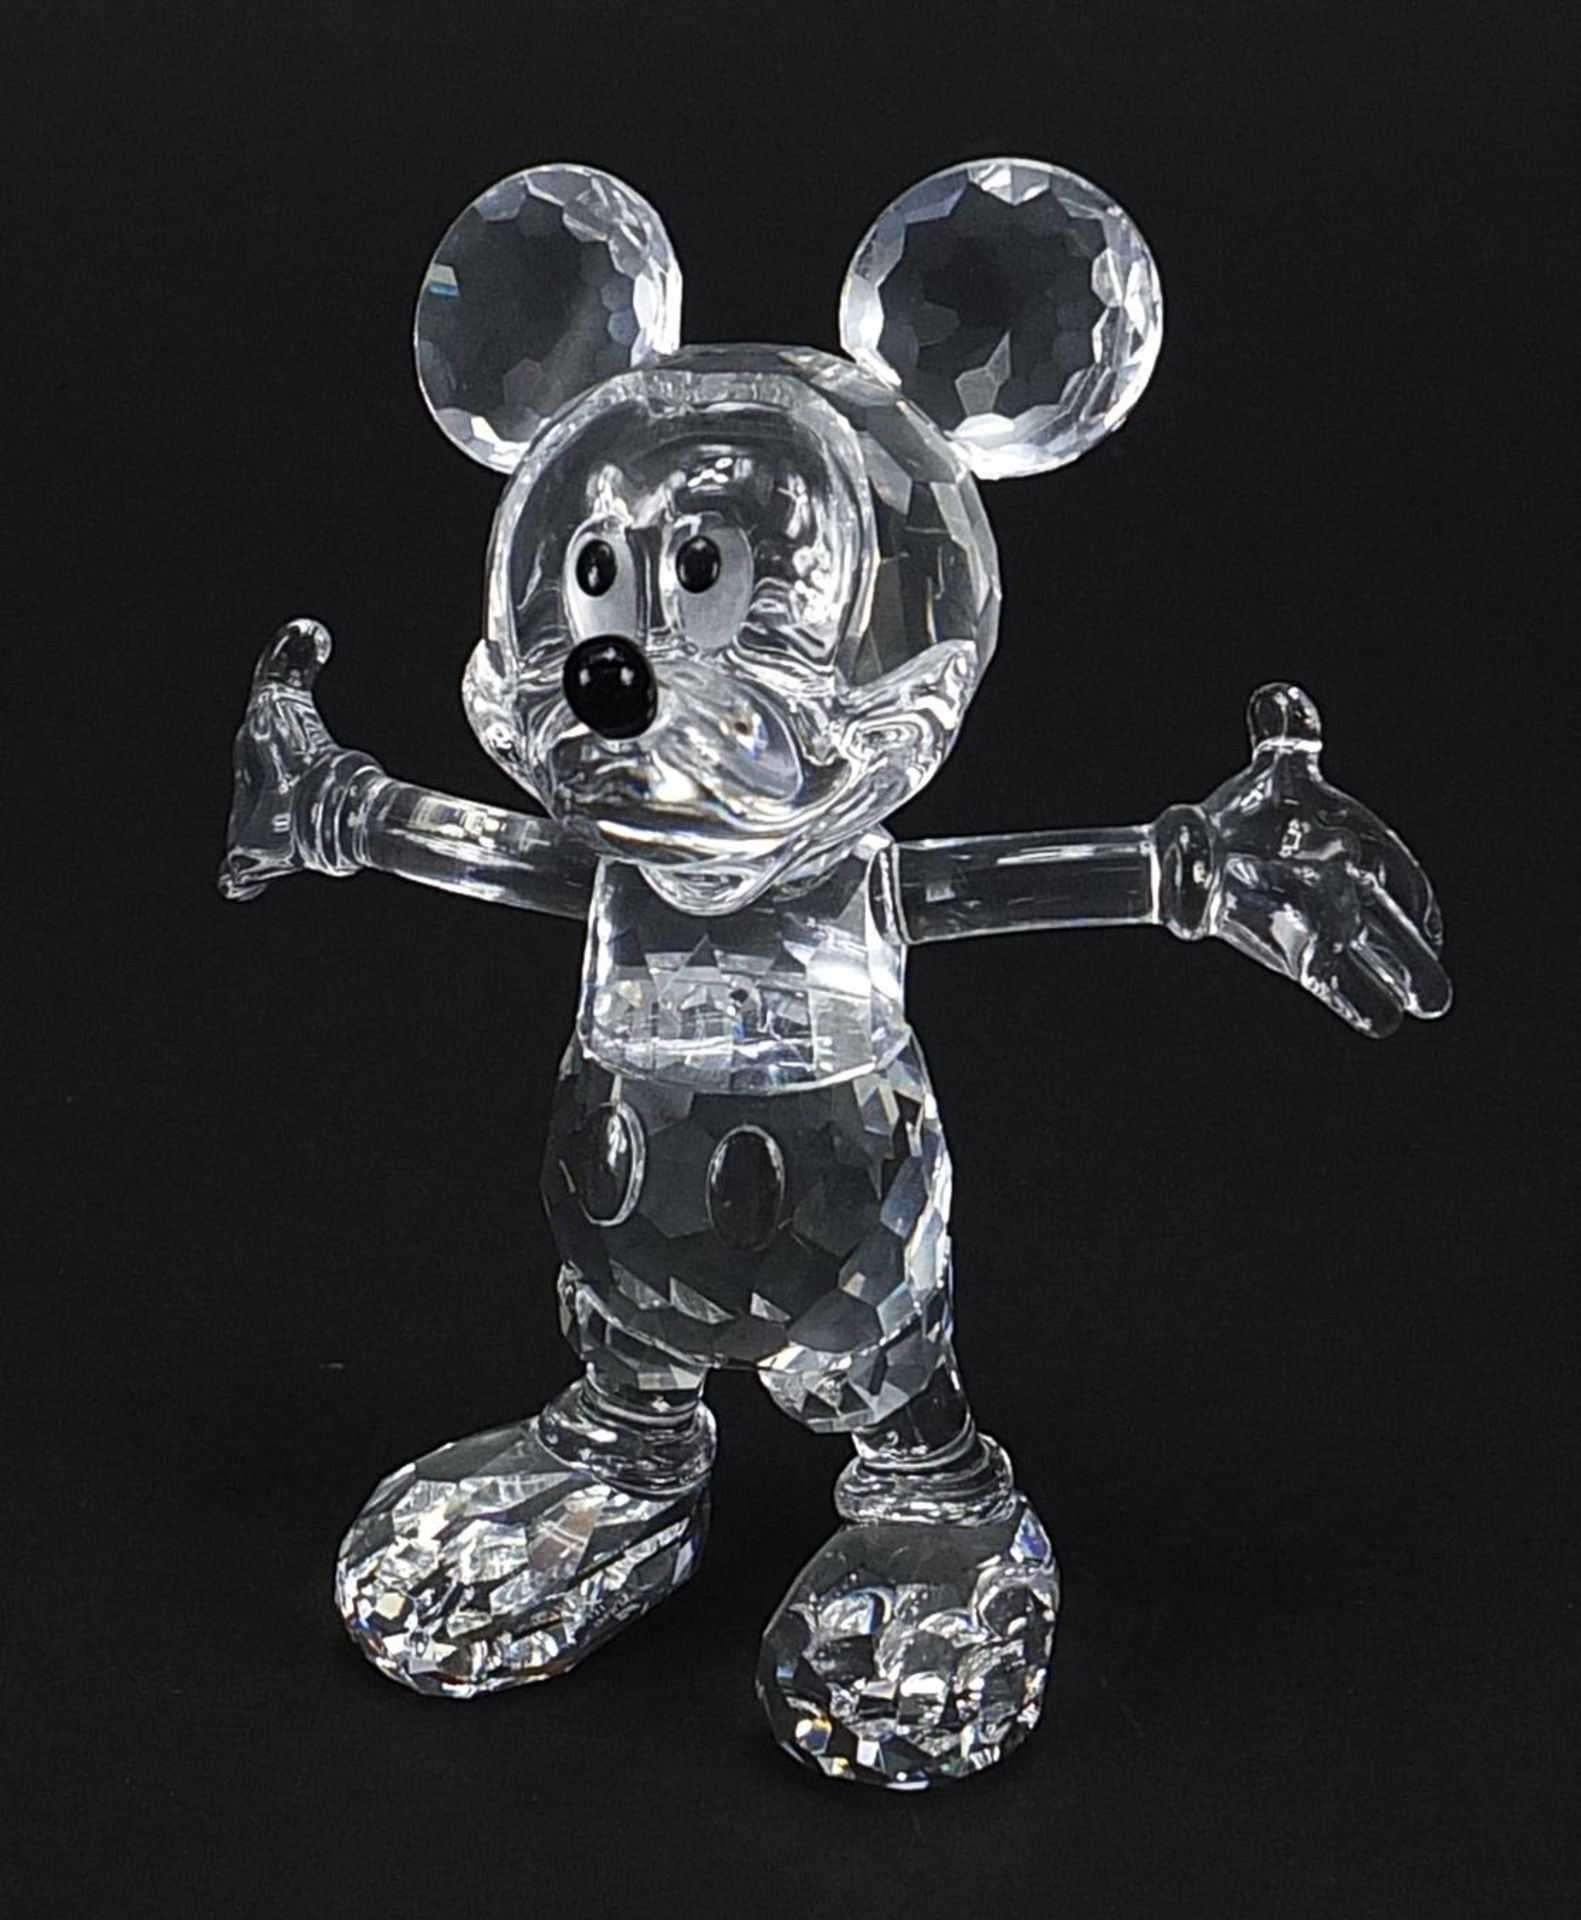 Swarovski Crystal Mickey Mouse Disney figure with box, 10cm high - Image 2 of 5